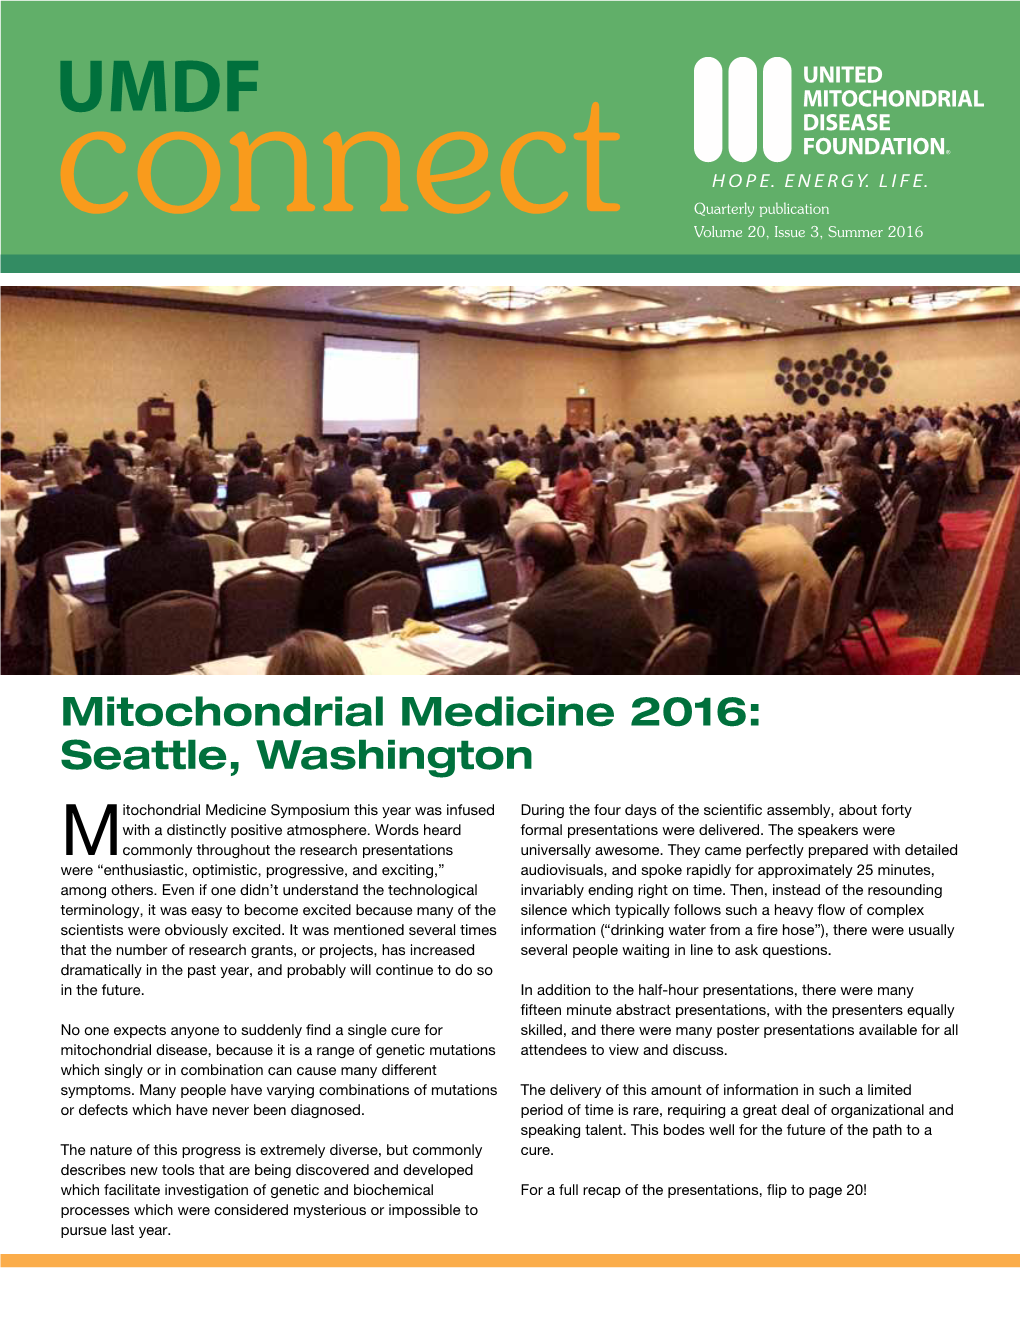 Mitochondrial Medicine 2016: Seattle, Washington